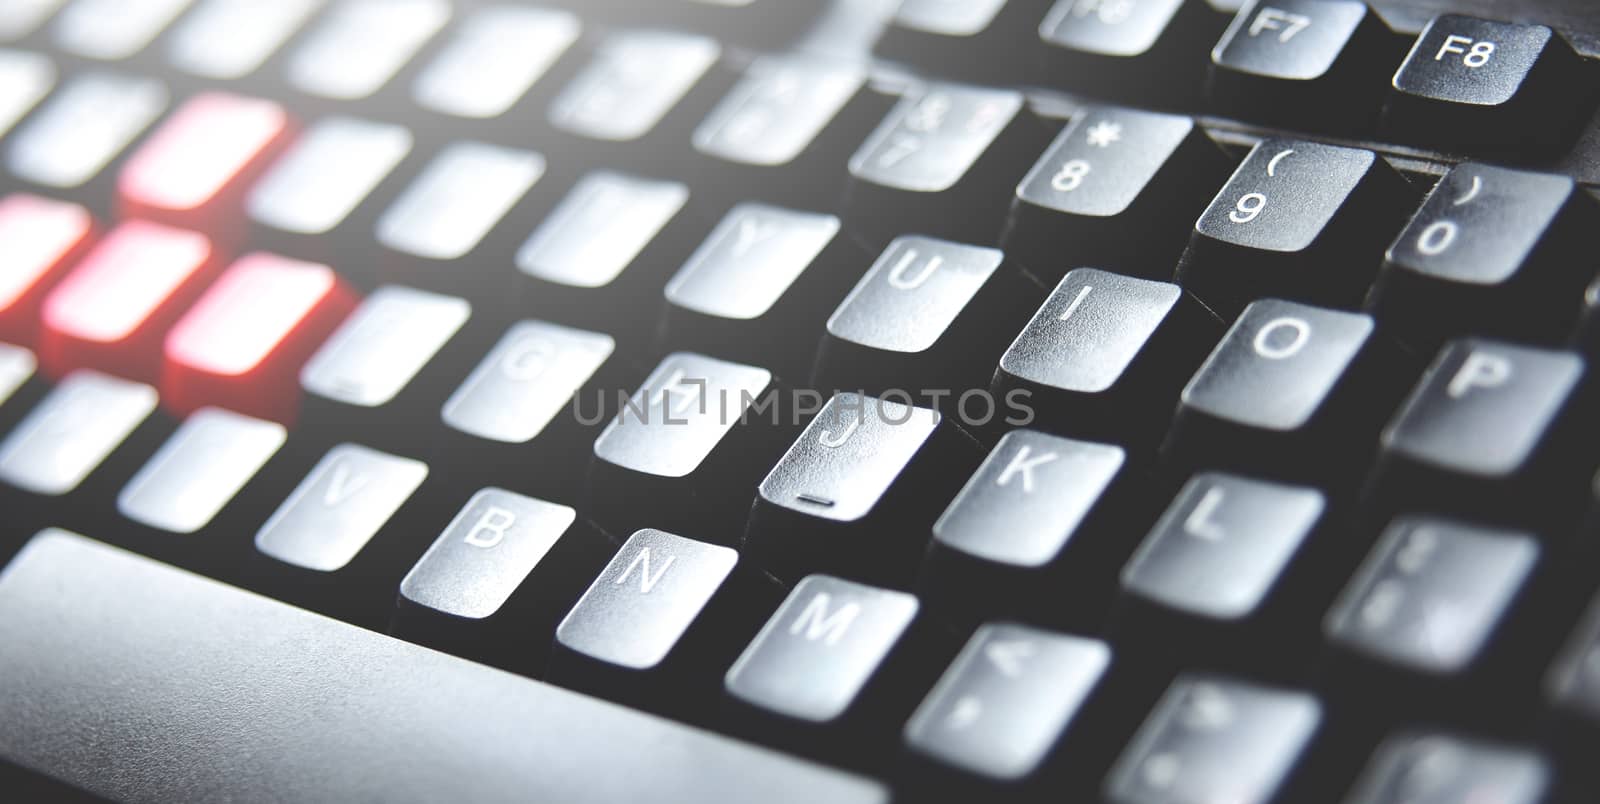 Close up view of a computer keyboard keys